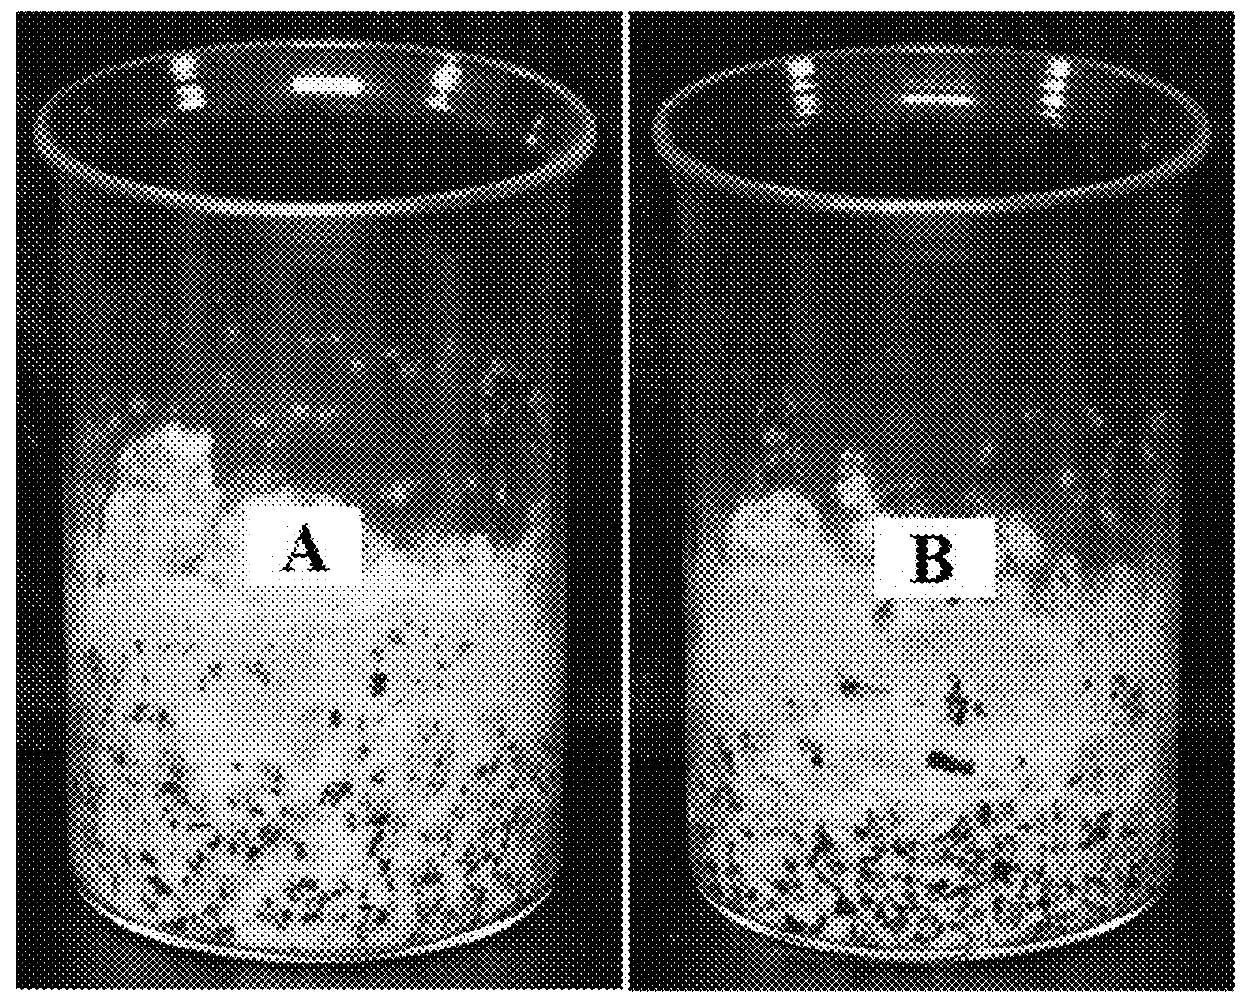 Method for preparing a degradable material